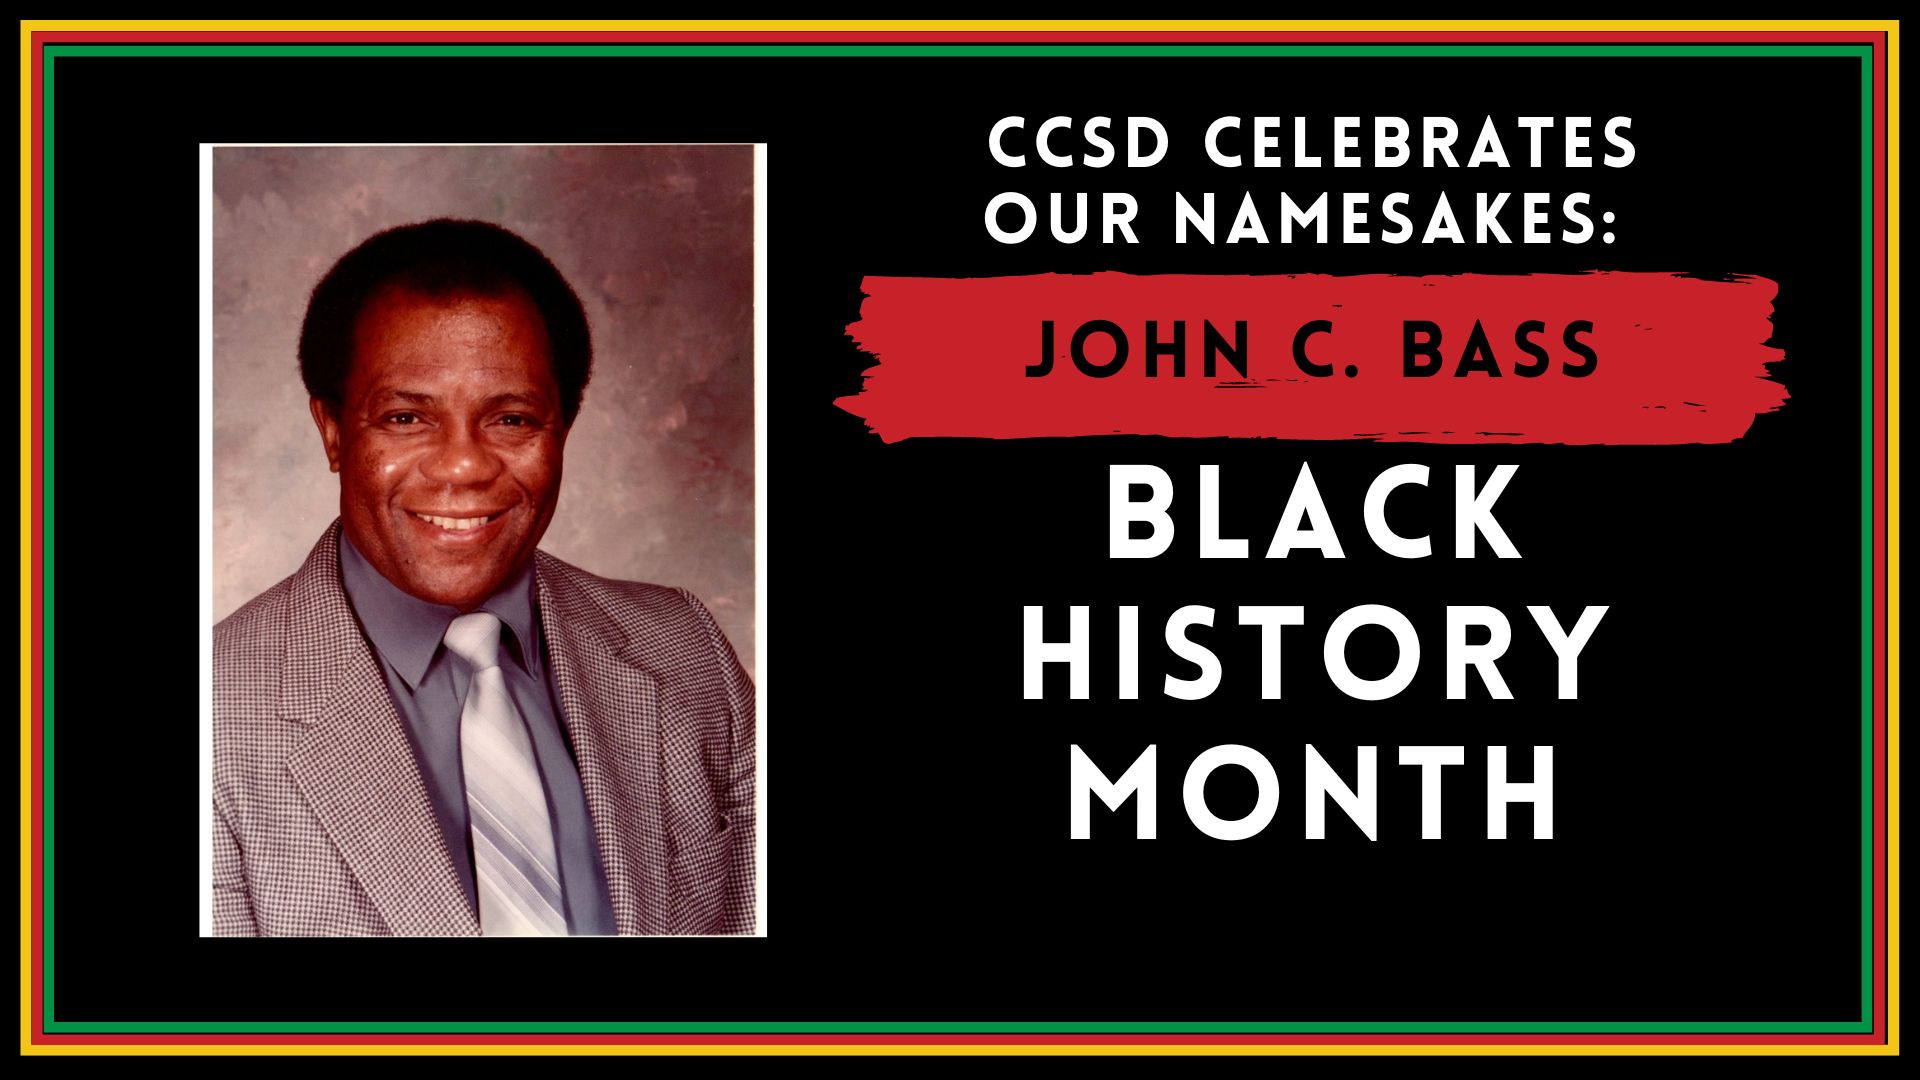 CCSD celebrates its namesakes: John C. Bass